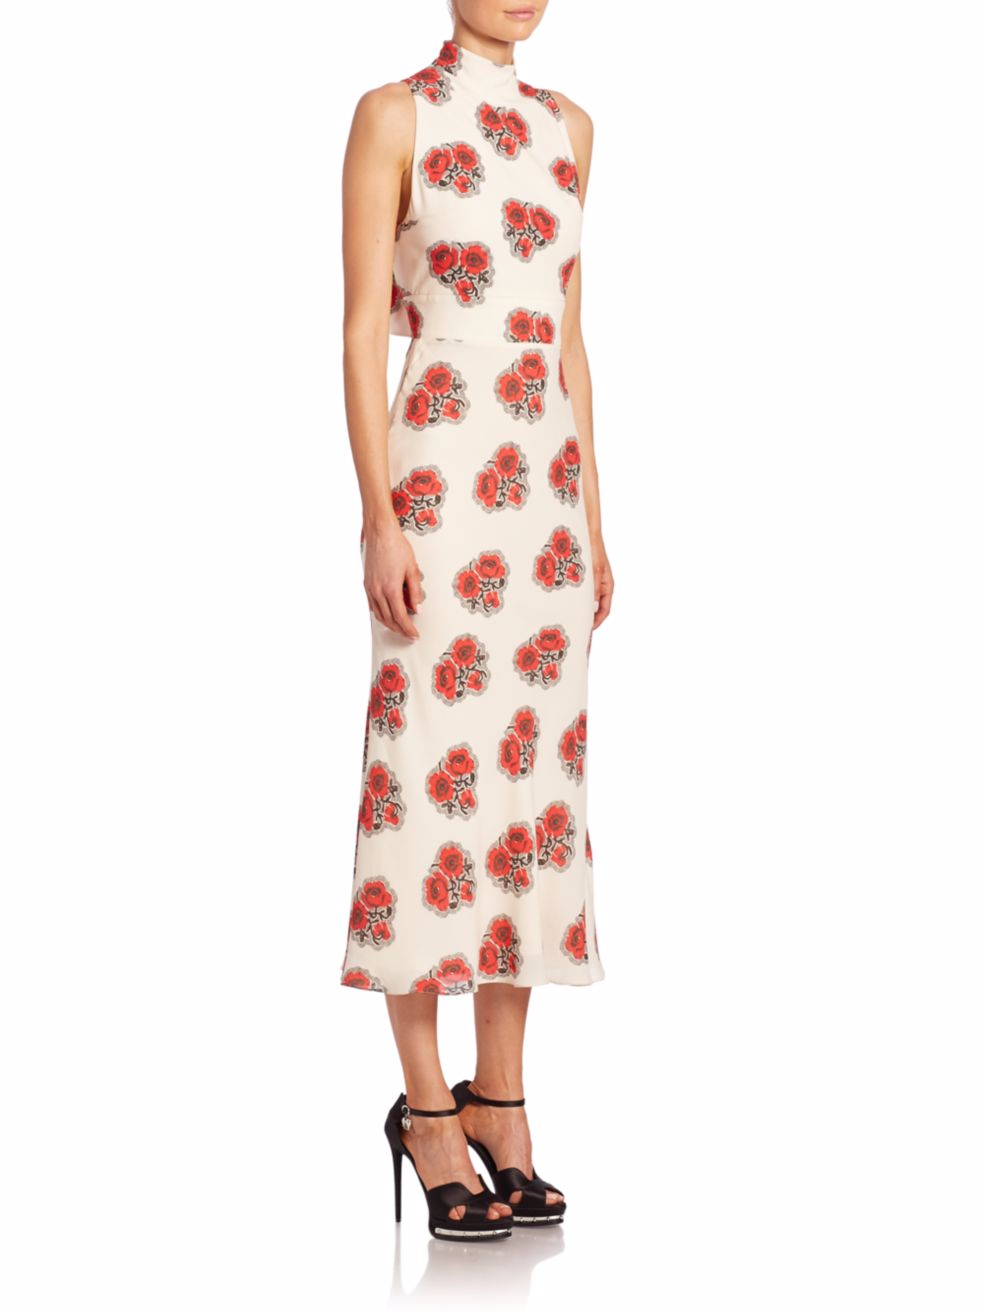 Alexander McQueen Poppy Print Dress